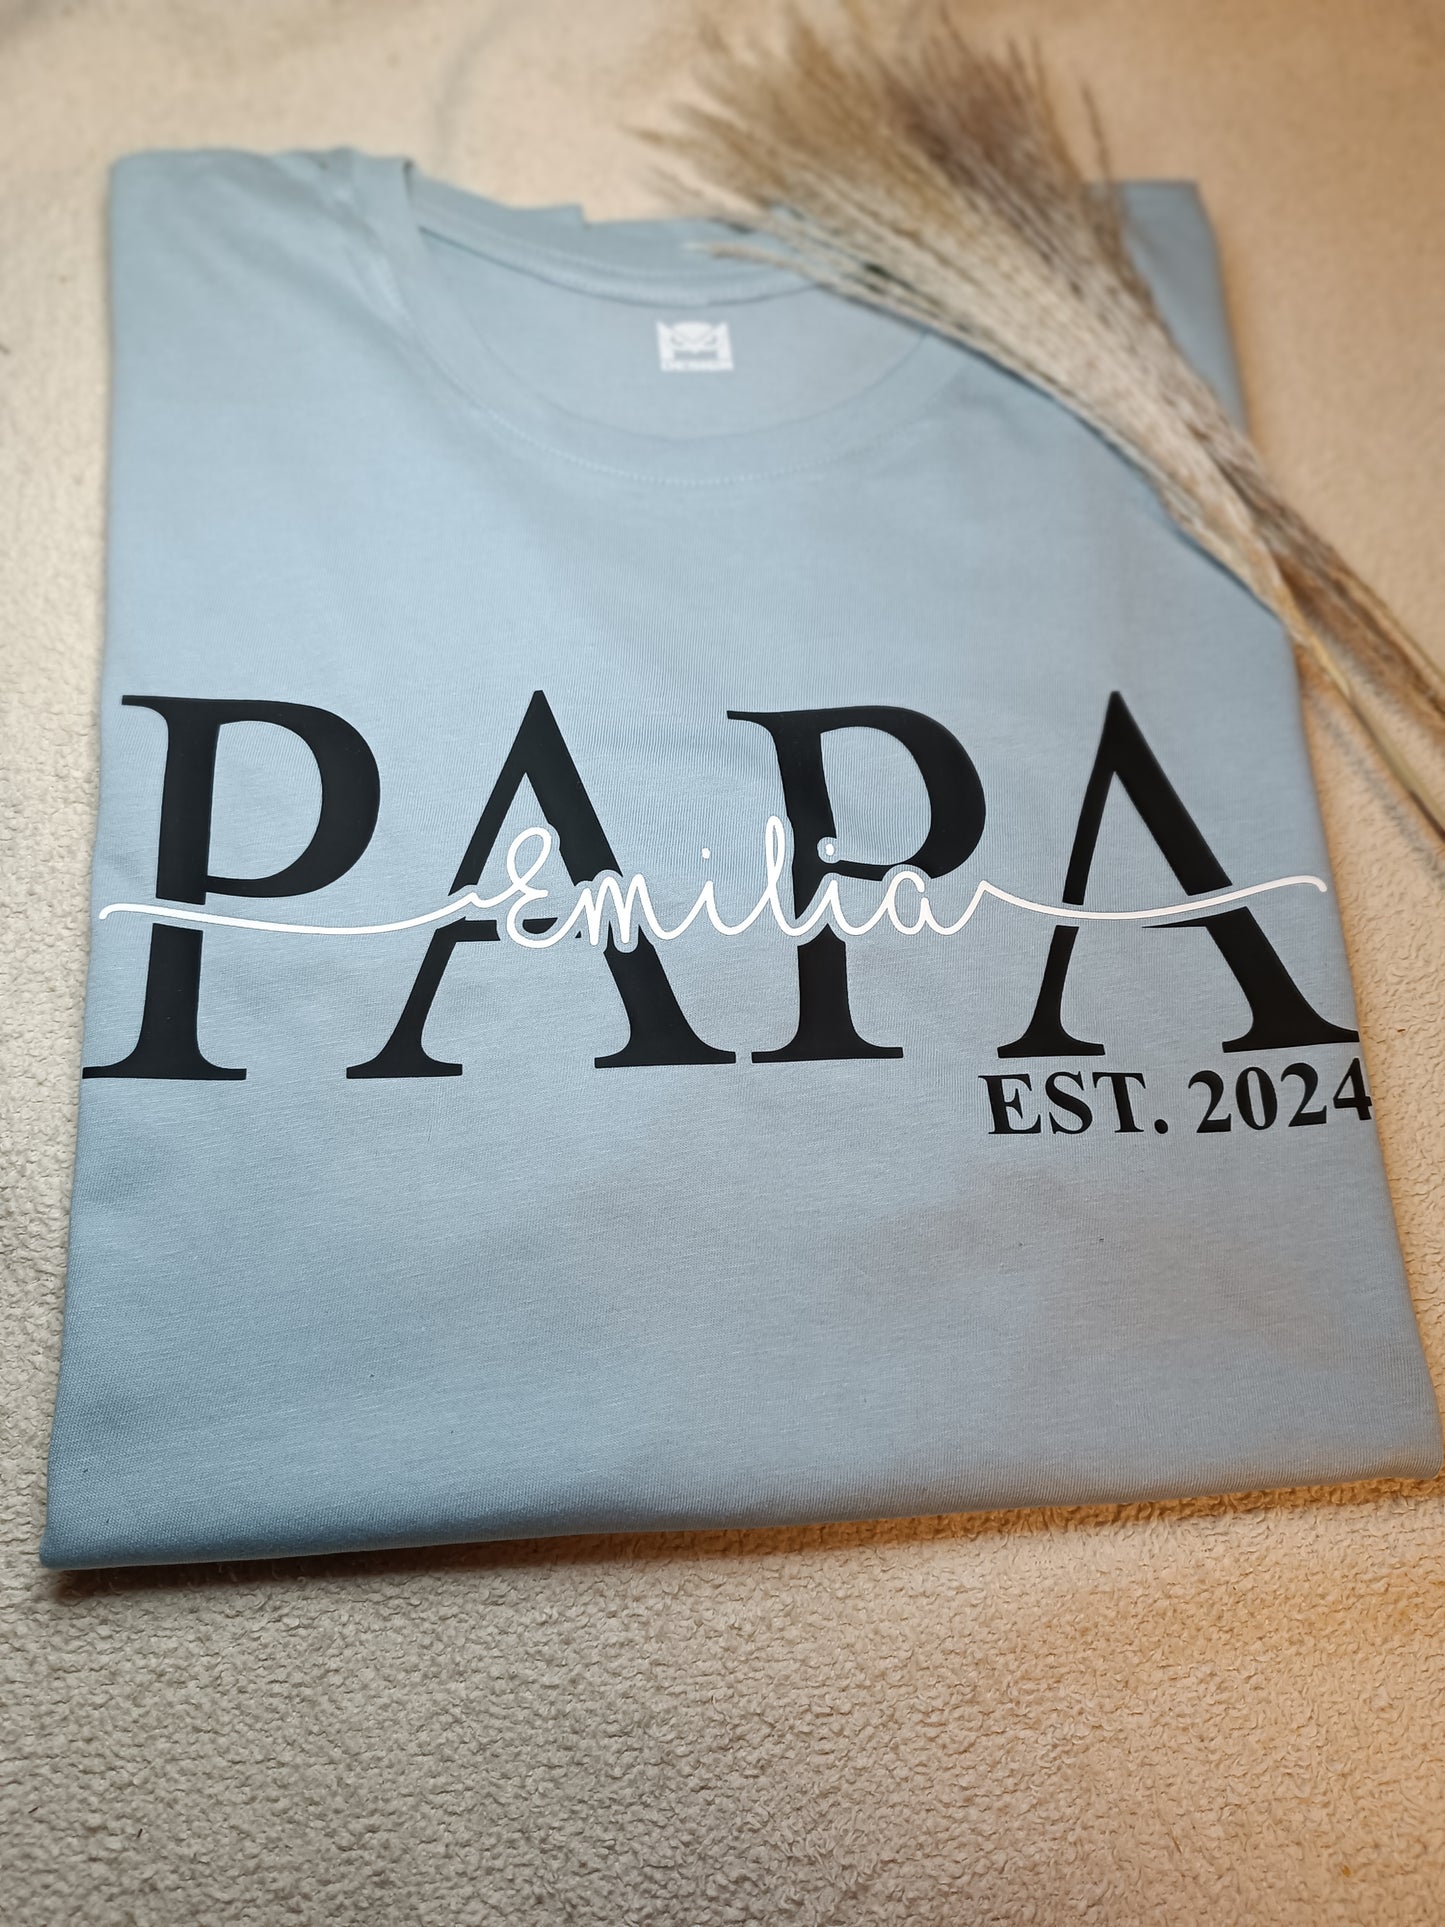 Papa Shirt | DAD Shirt | Opa Shirt | Vatertag | Geburt | Kindernamen